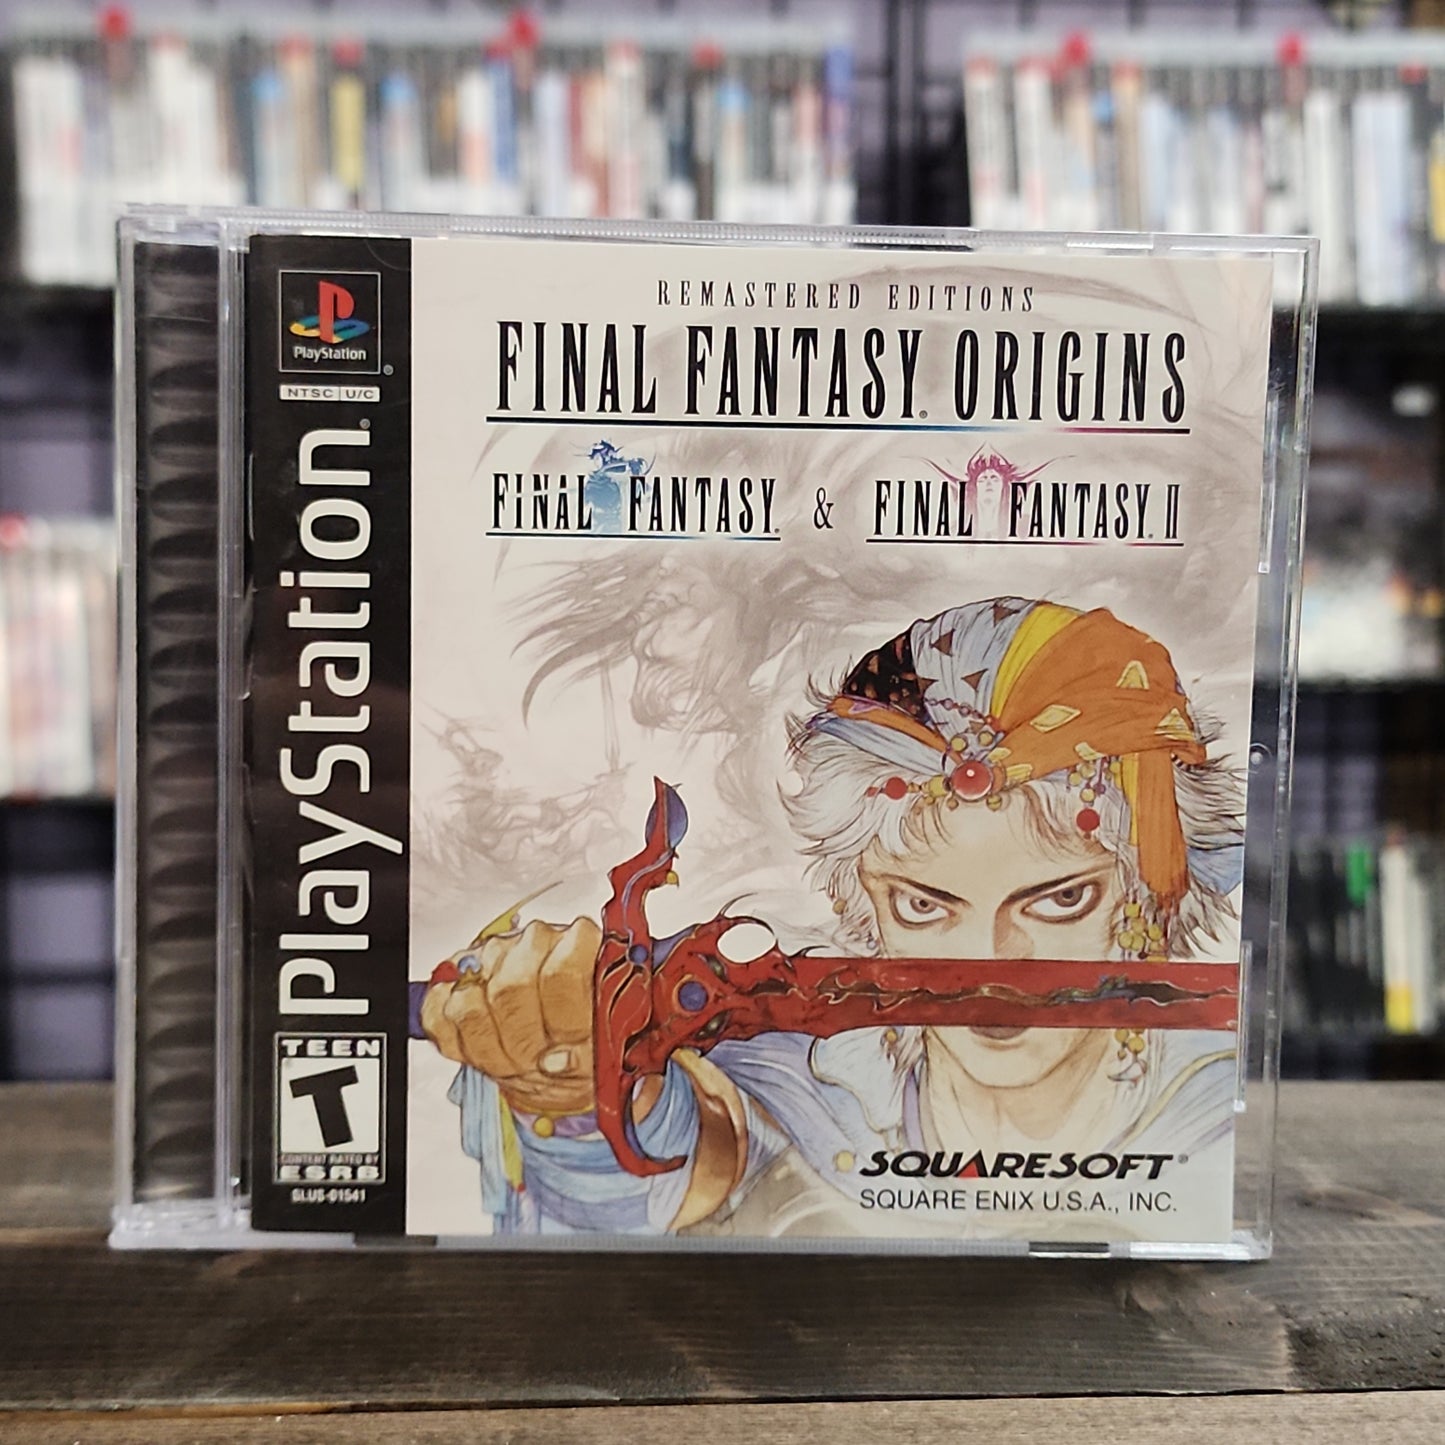 Playstation - Final Fantasy Origins